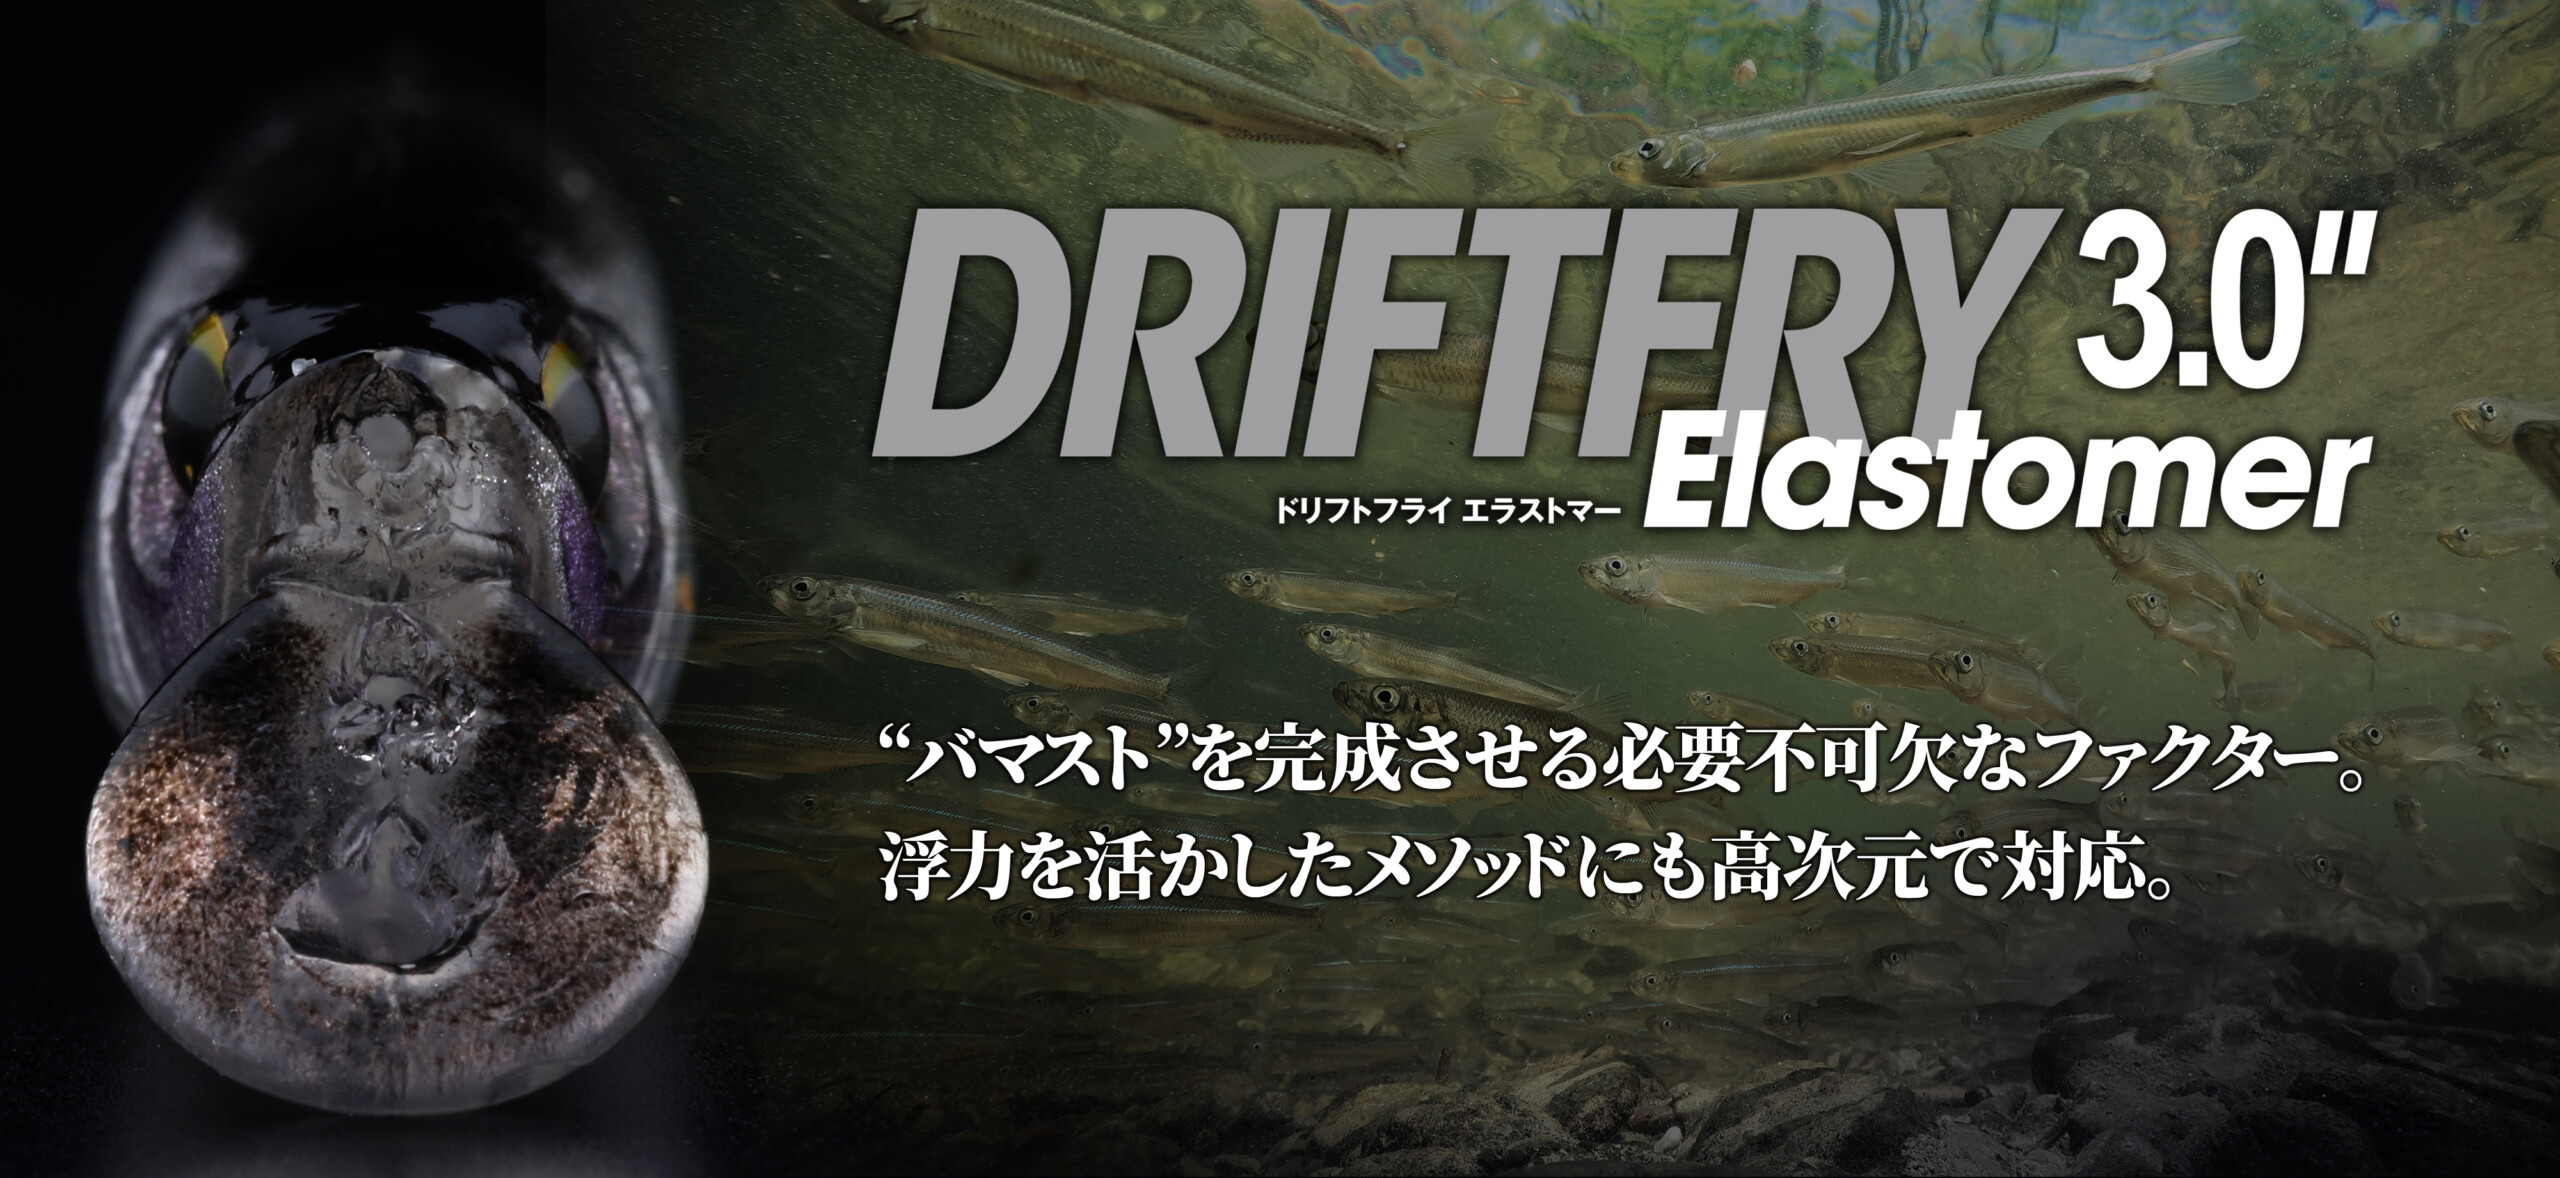 DRIFTFRY 3″ ELASTOMER / ドリフトフライ 3″エラストマー